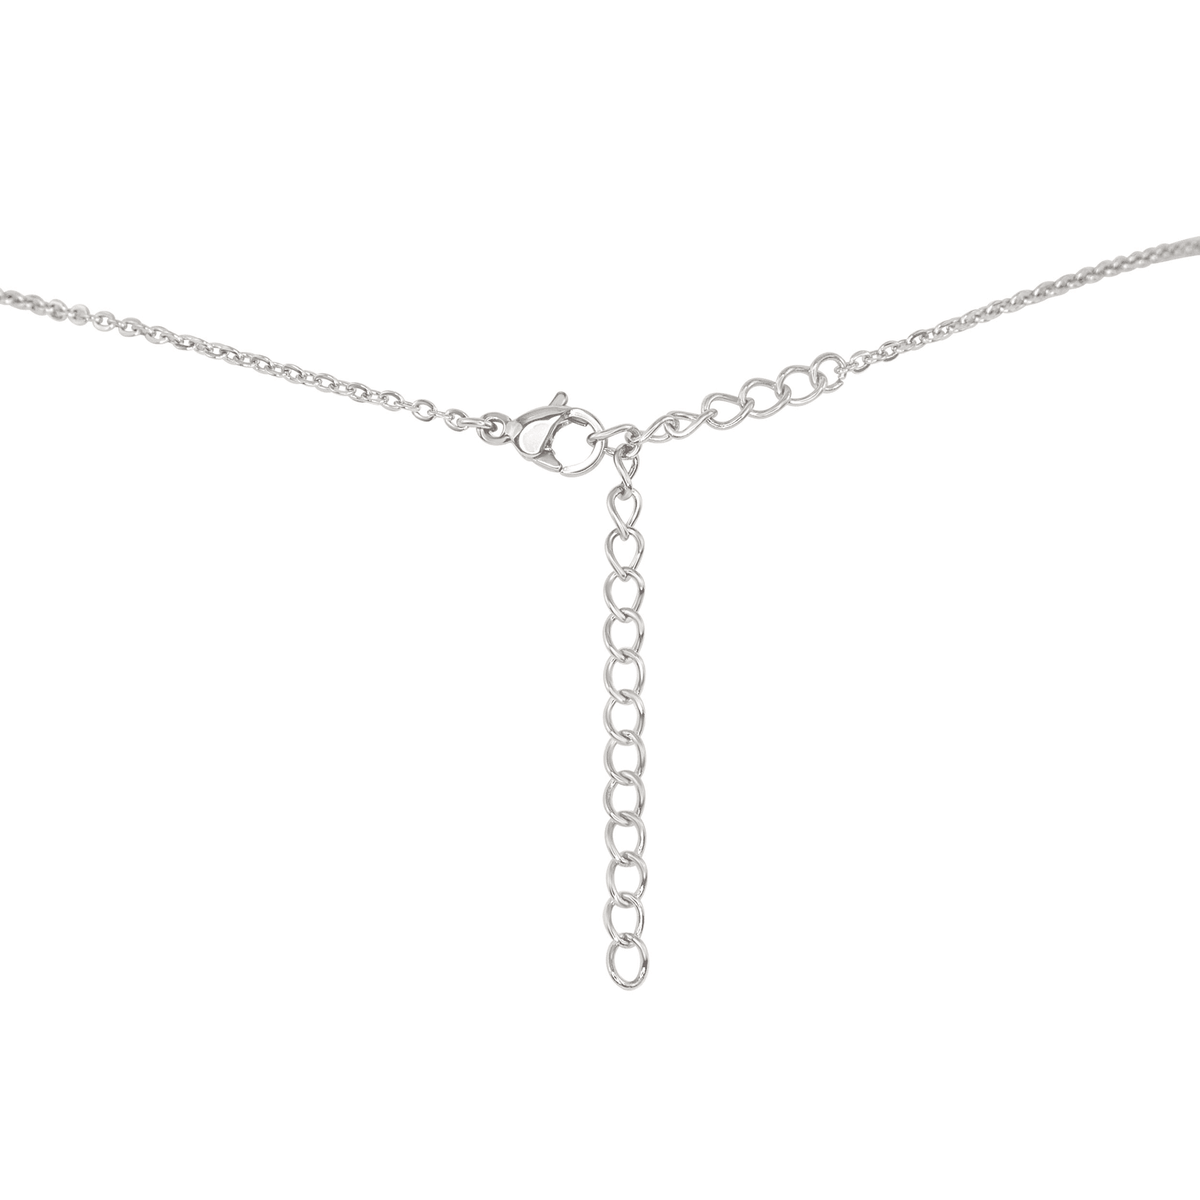 Amazonite Chip Bead Bar Necklace - Amazonite Chip Bead Bar Necklace - 14k Gold Fill - Luna Tide Handmade Crystal Jewellery